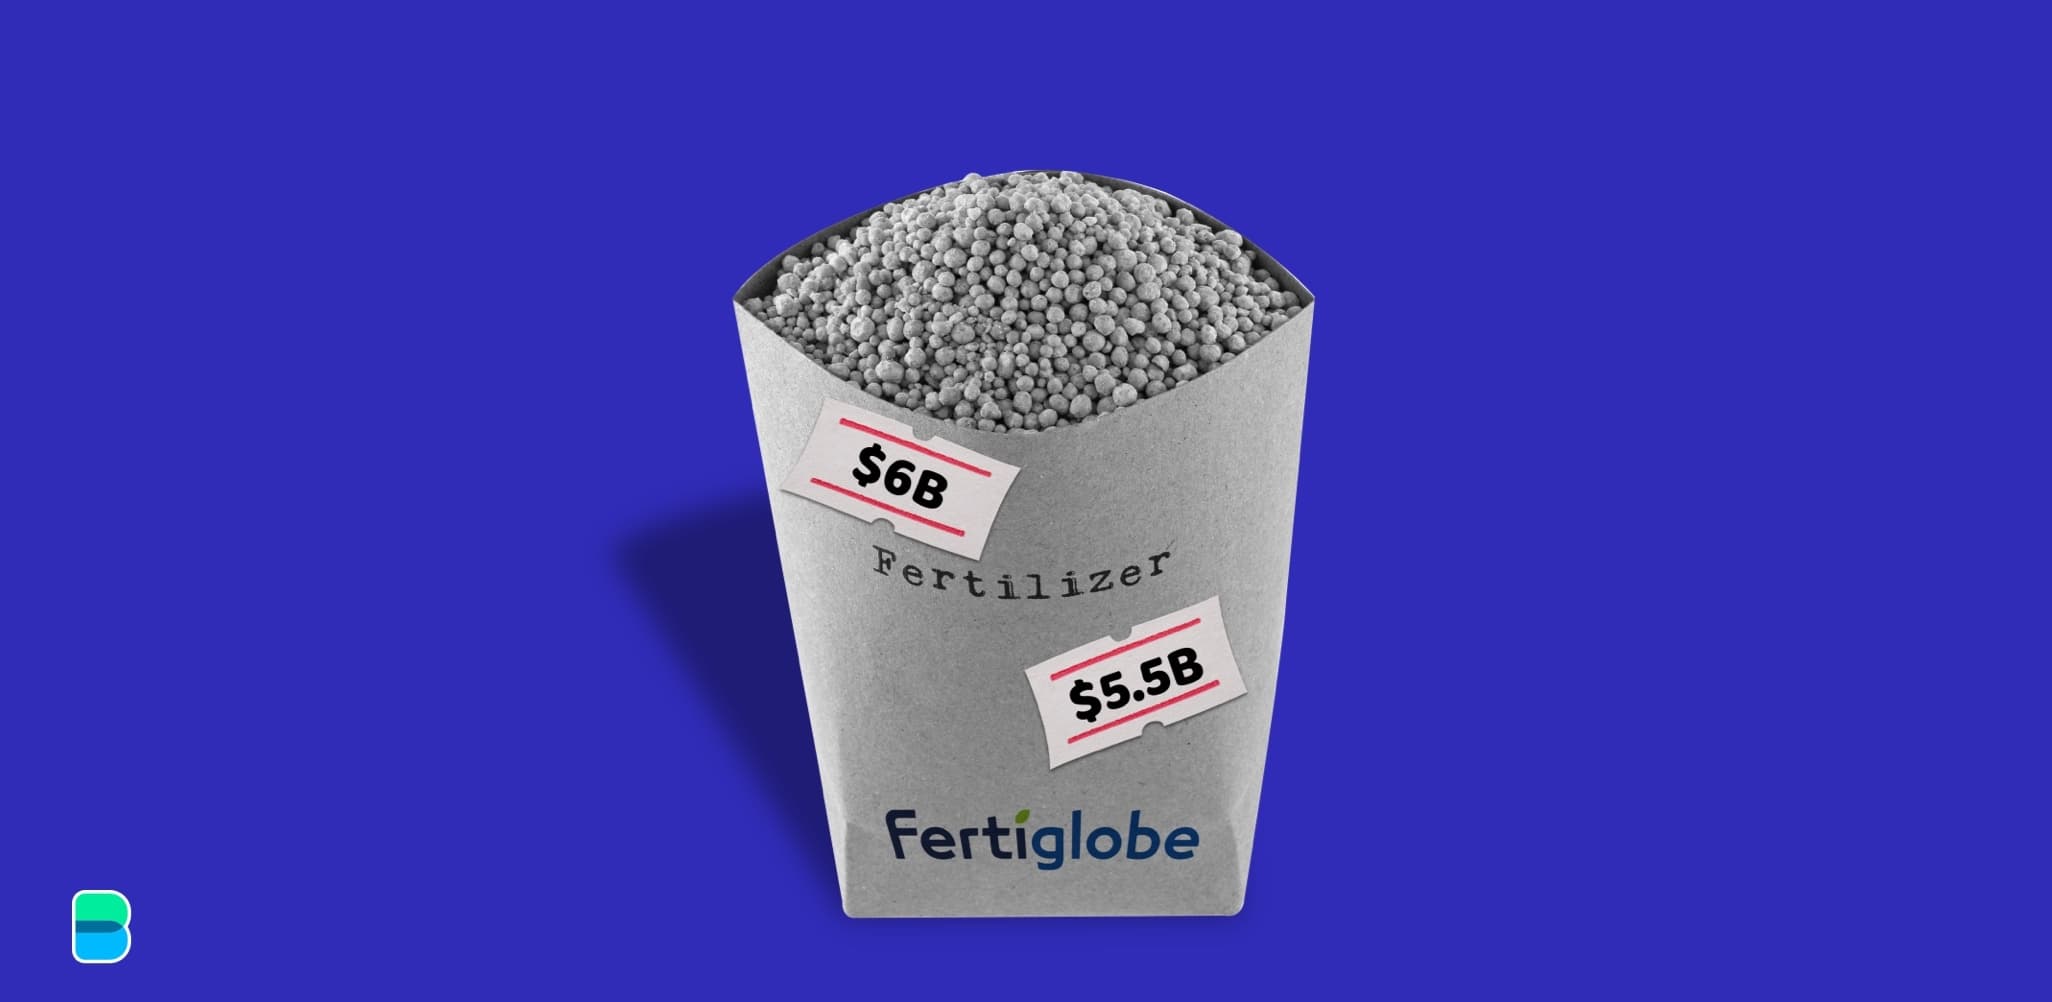 The price has been set on Fertiglobe